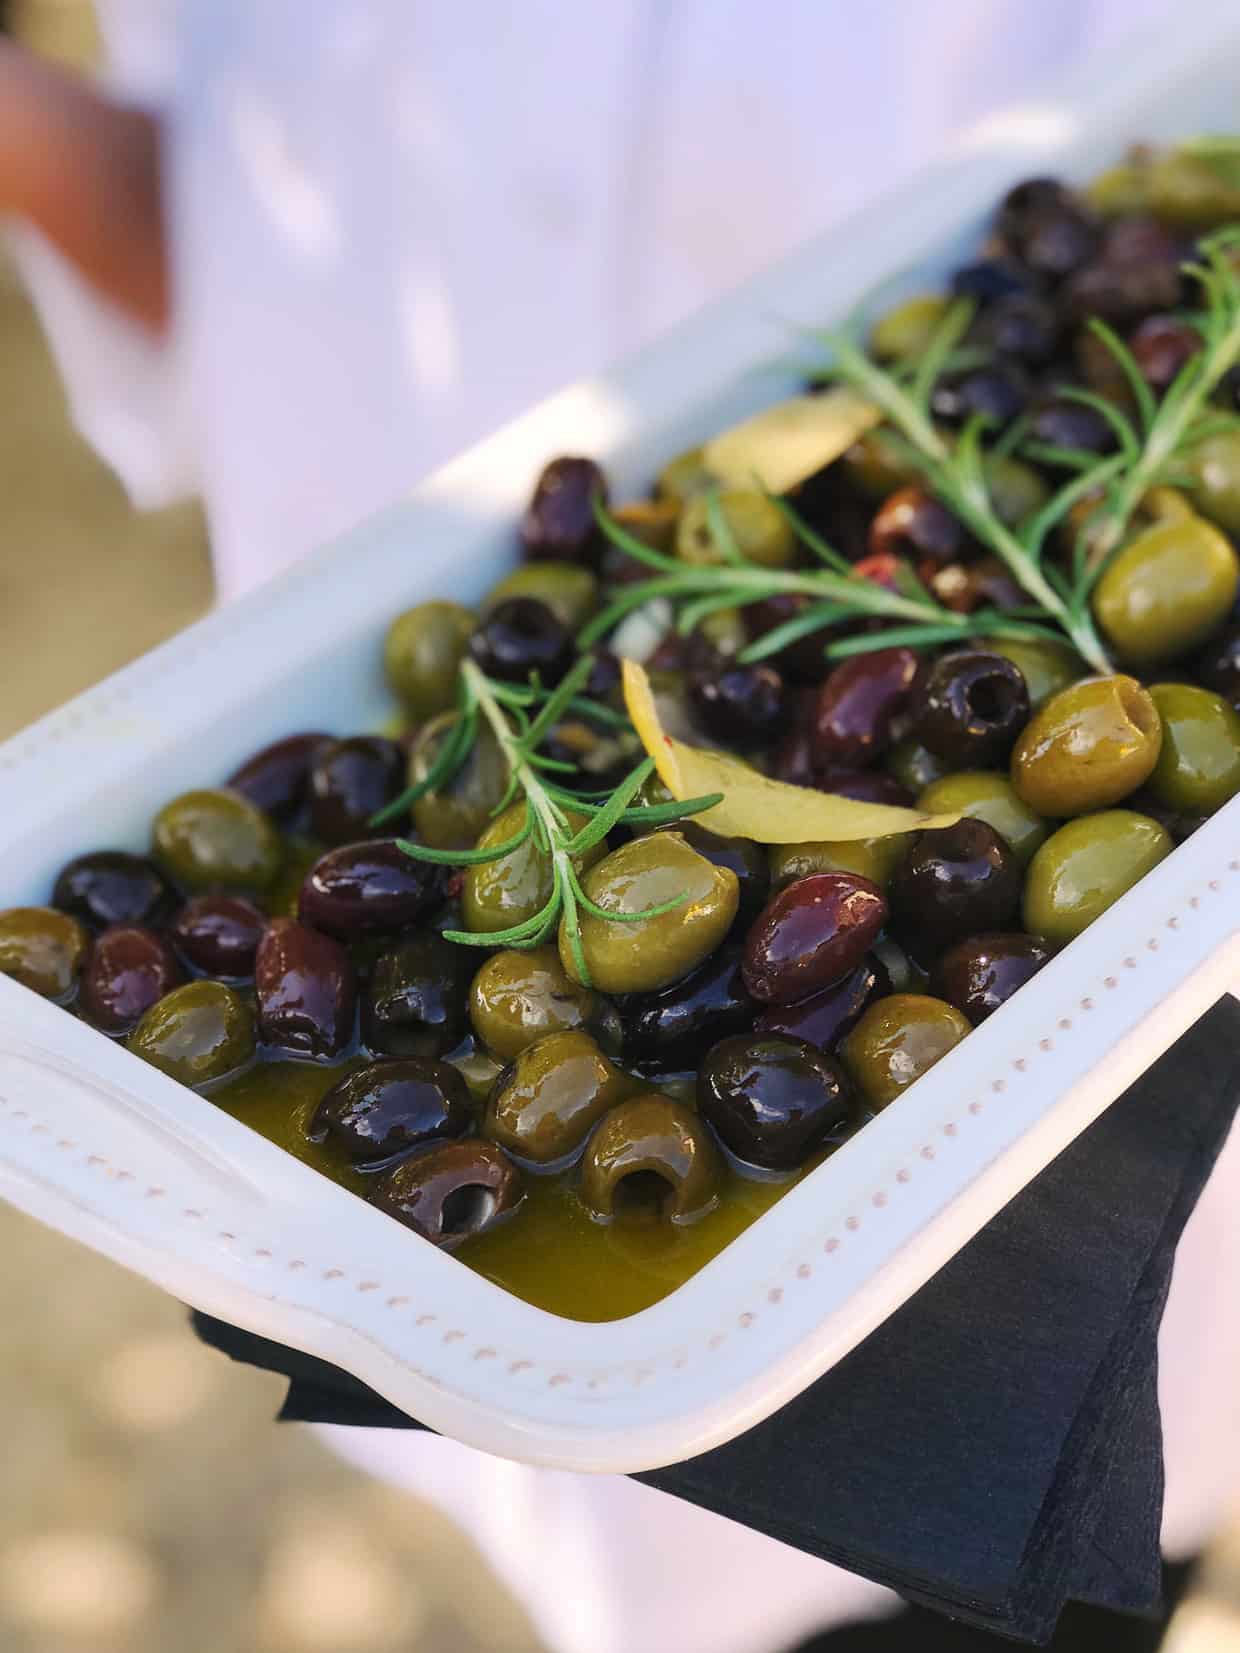 Olives ready to serve.